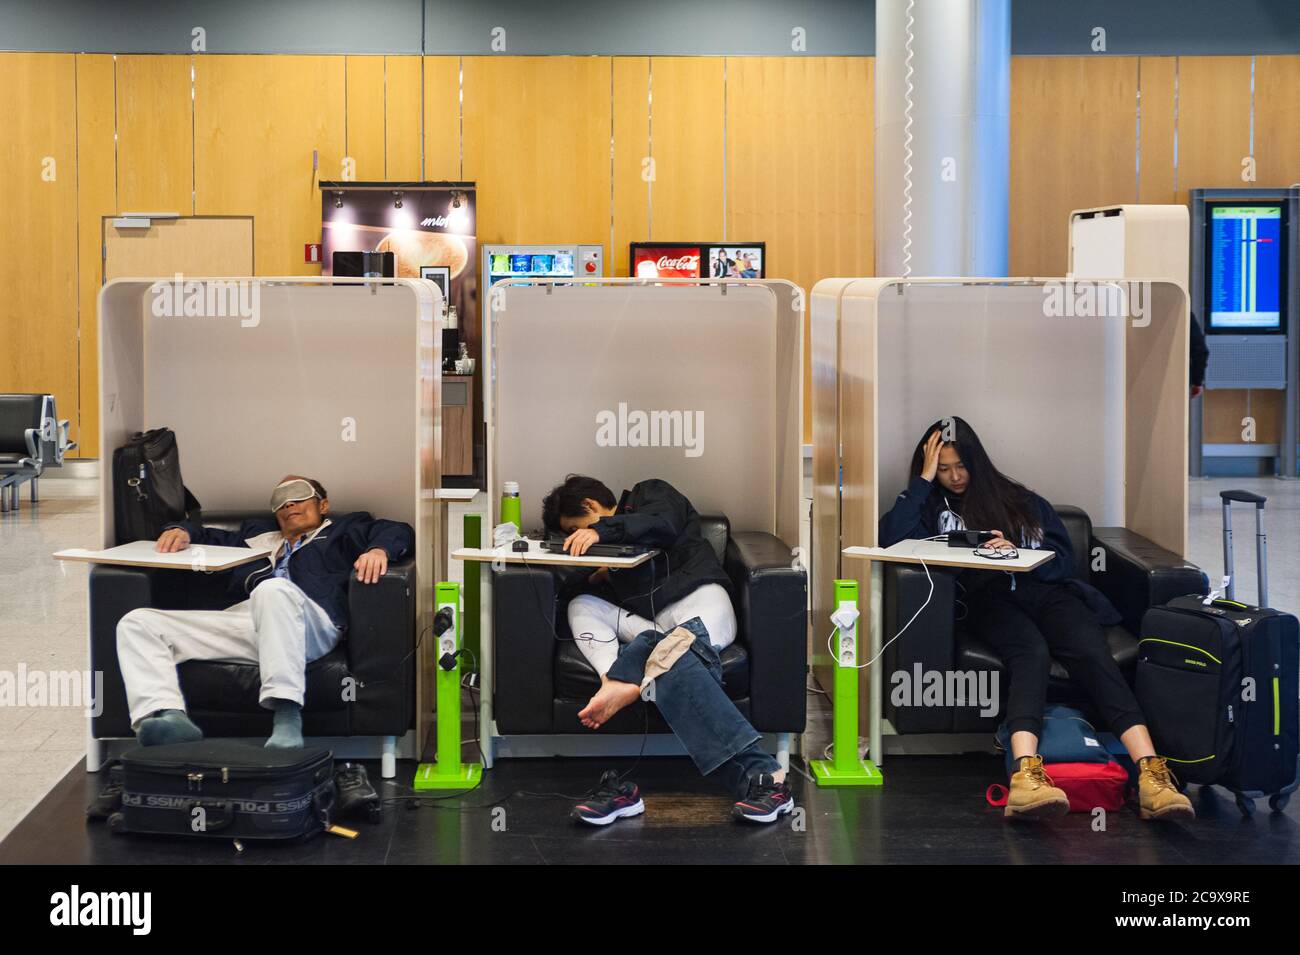 10.06.2016, Helsinki, Finland, Europe - Passengers wait for their departure flight to Asia at Helsinki's international airport Vantaa. Stock Photo